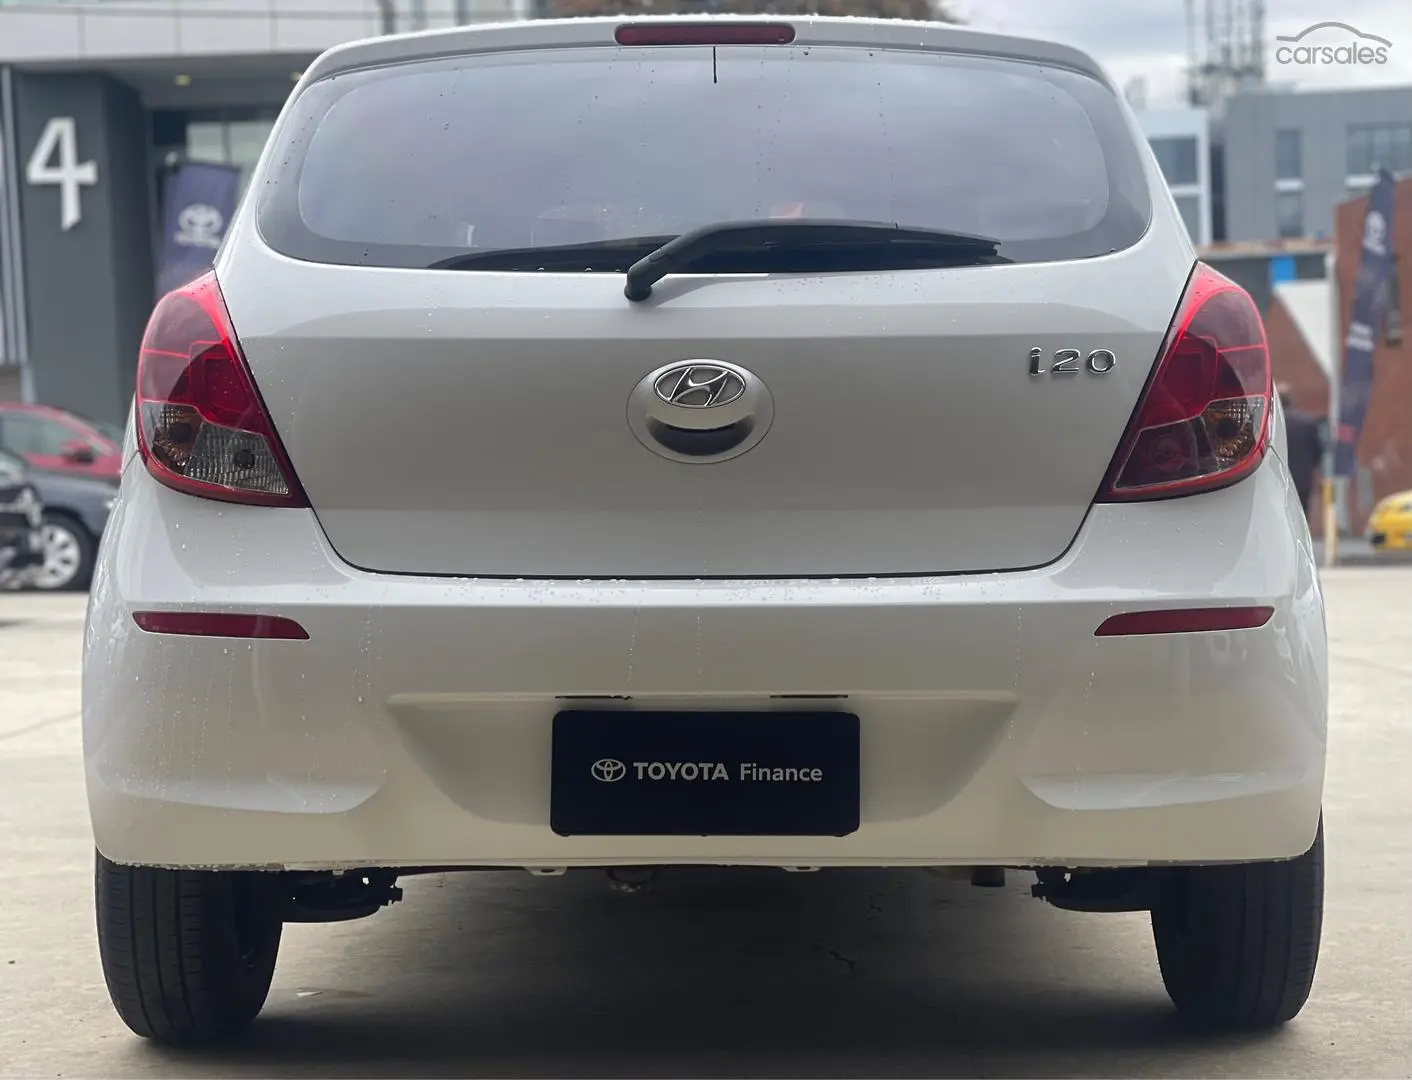 2015 Hyundai i20 Image 6